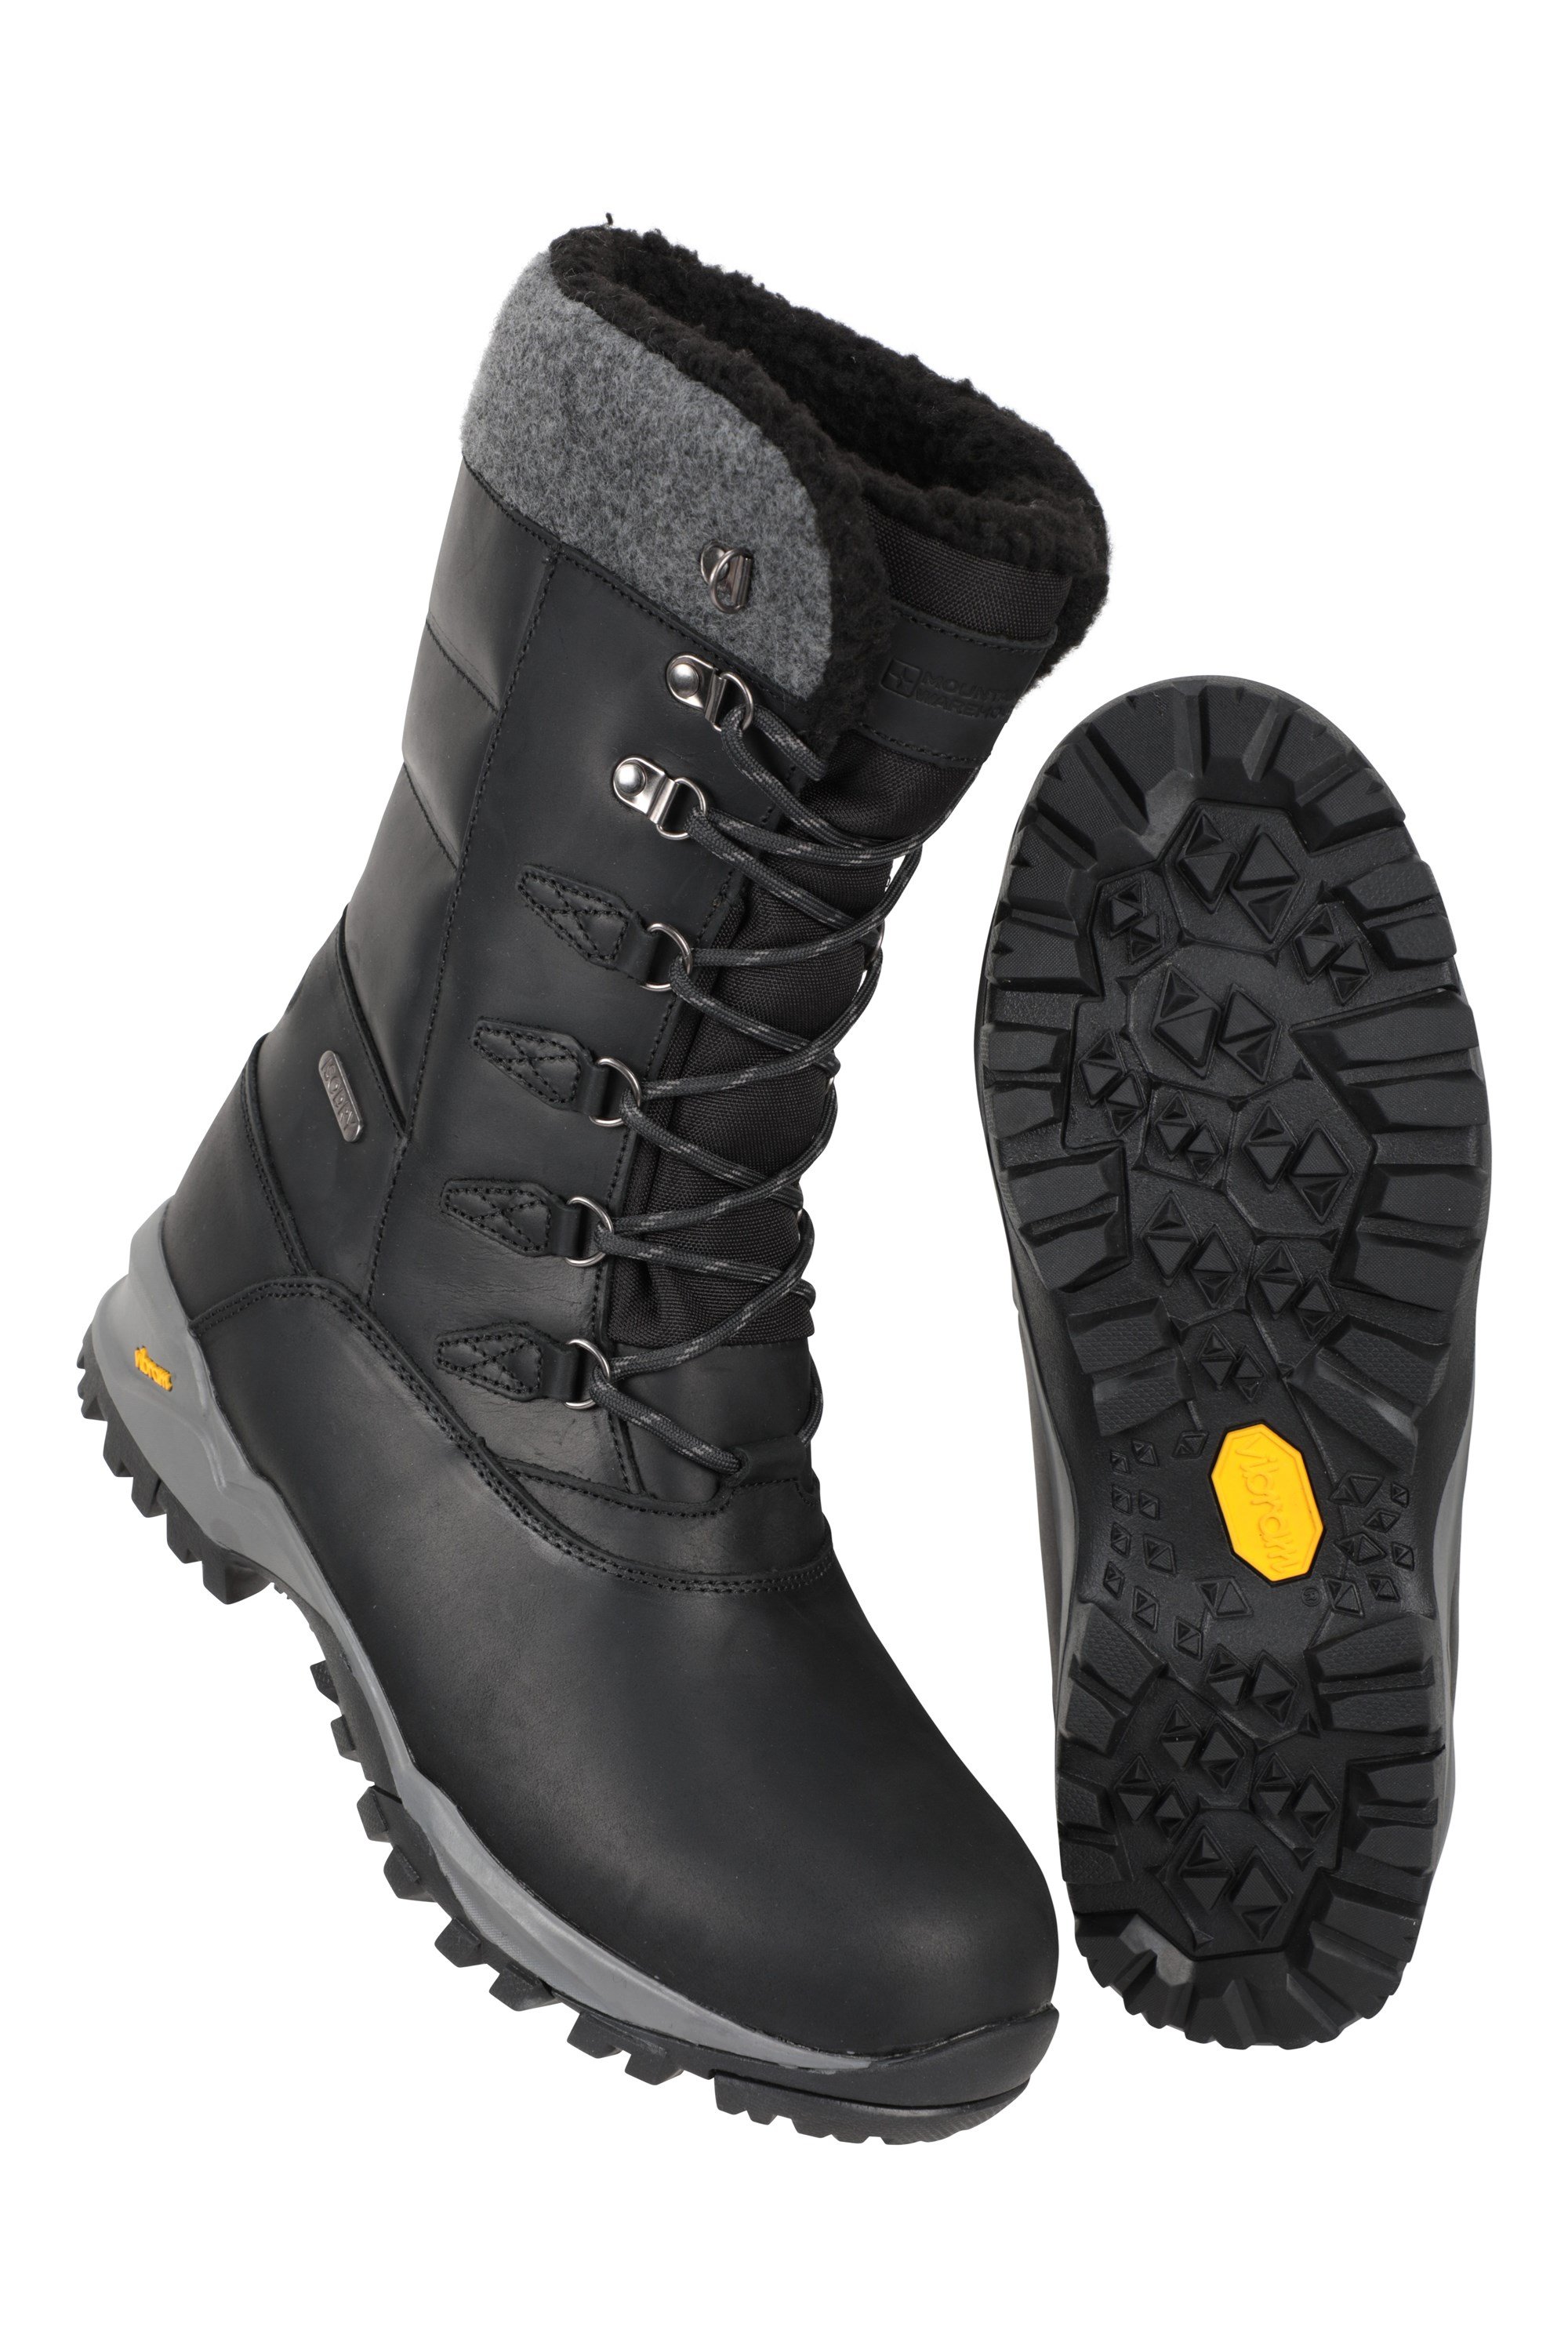 Vostock Extreme Mens Vibram Snow Boots - Black